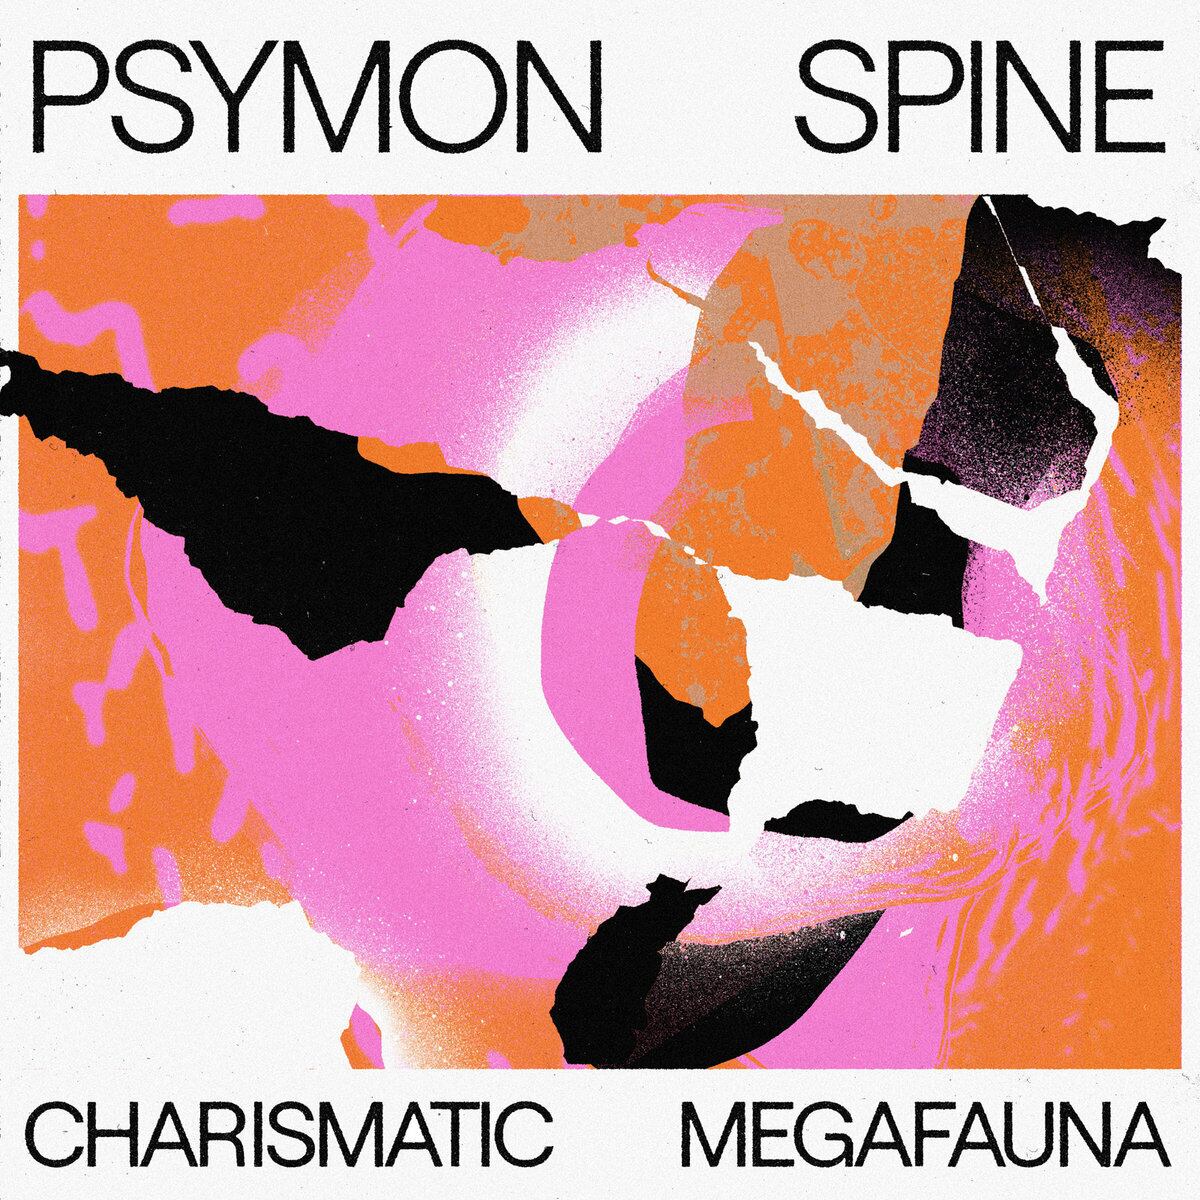 Psymon Spine / Charismatic Megafauna（100 Ltd Opaque Pink LP）